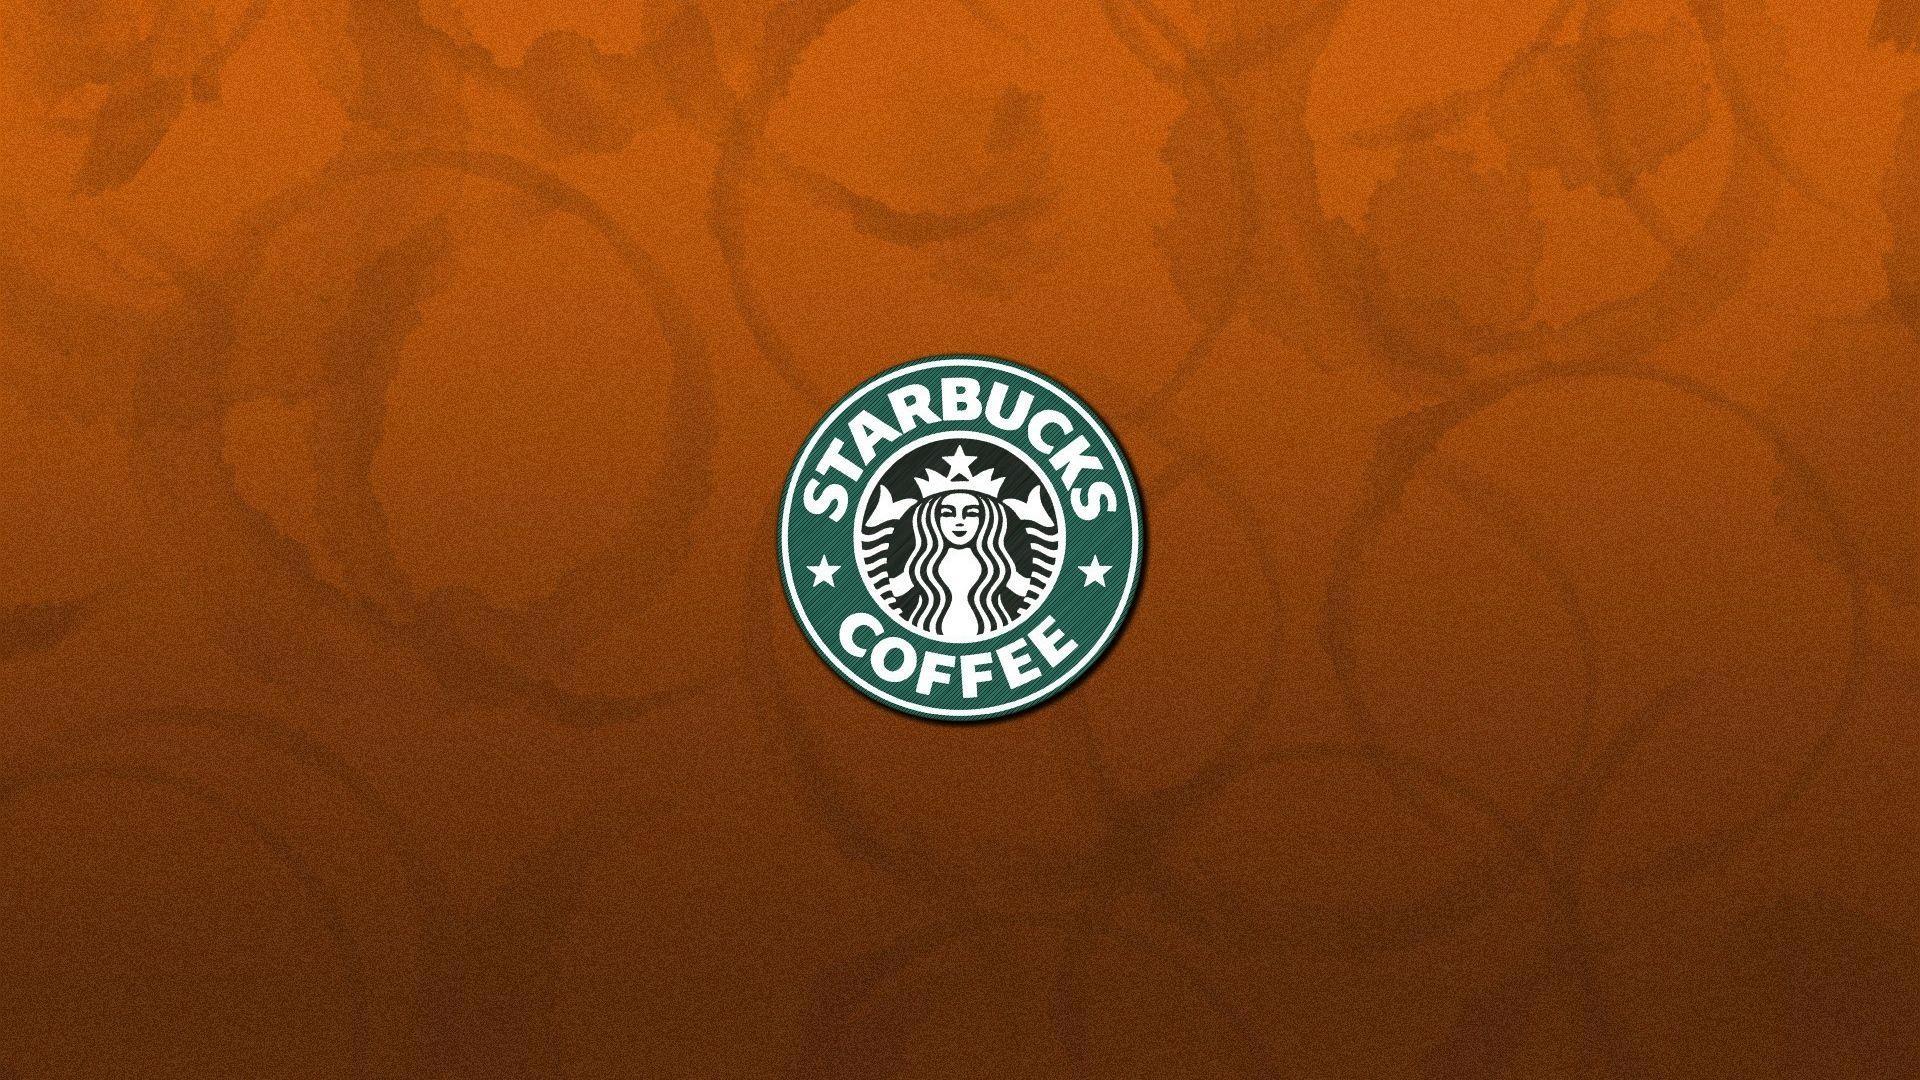 Starbucks Logo Wallpaper 53512 1920x1080 px